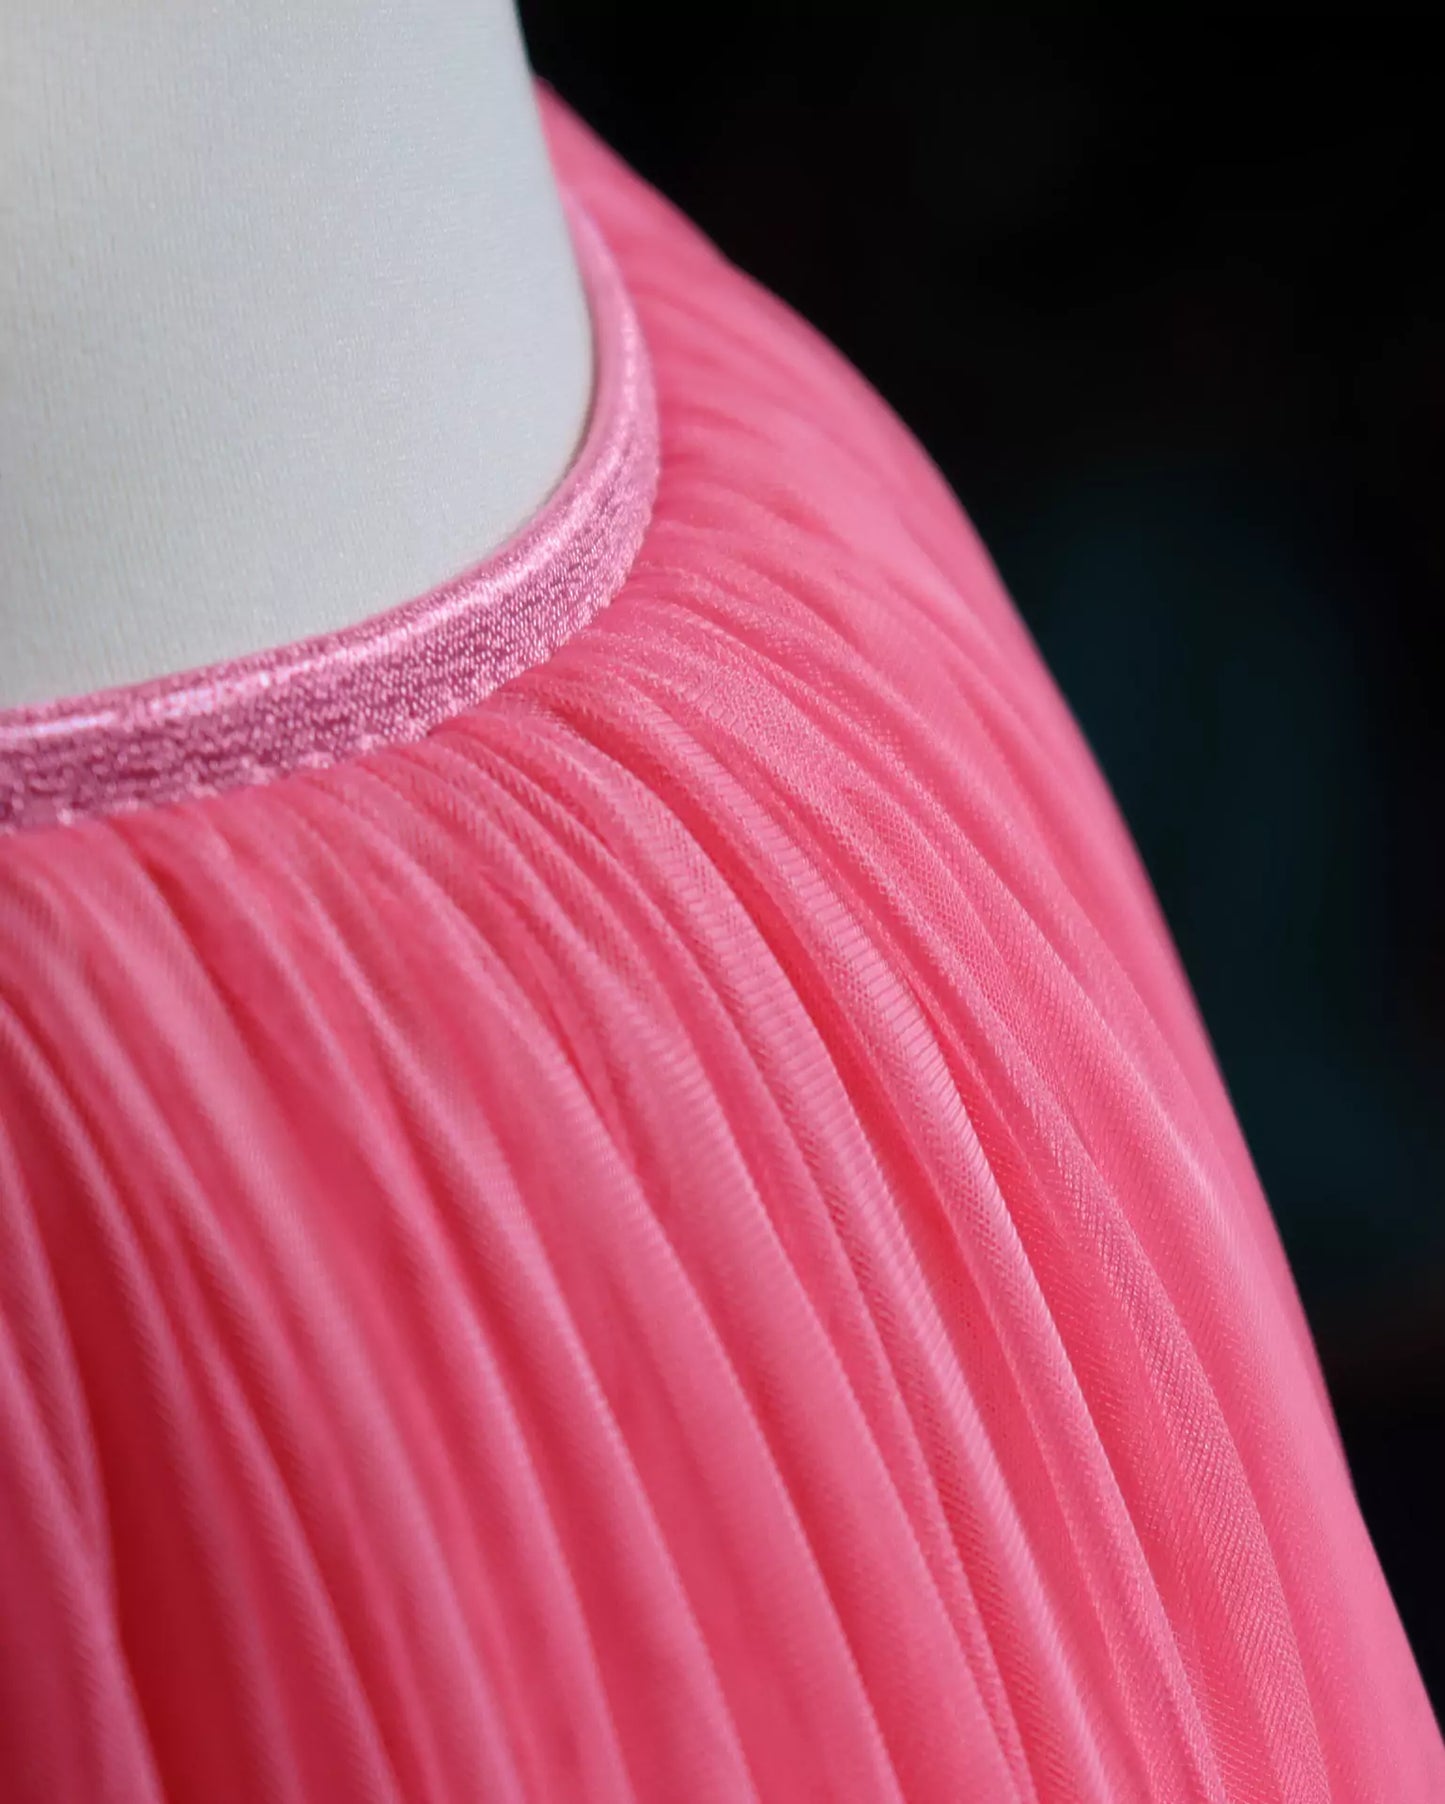 Professional romantic ballet tutu. Dance tutu skirt pink for ballerina. Custome made dancewear